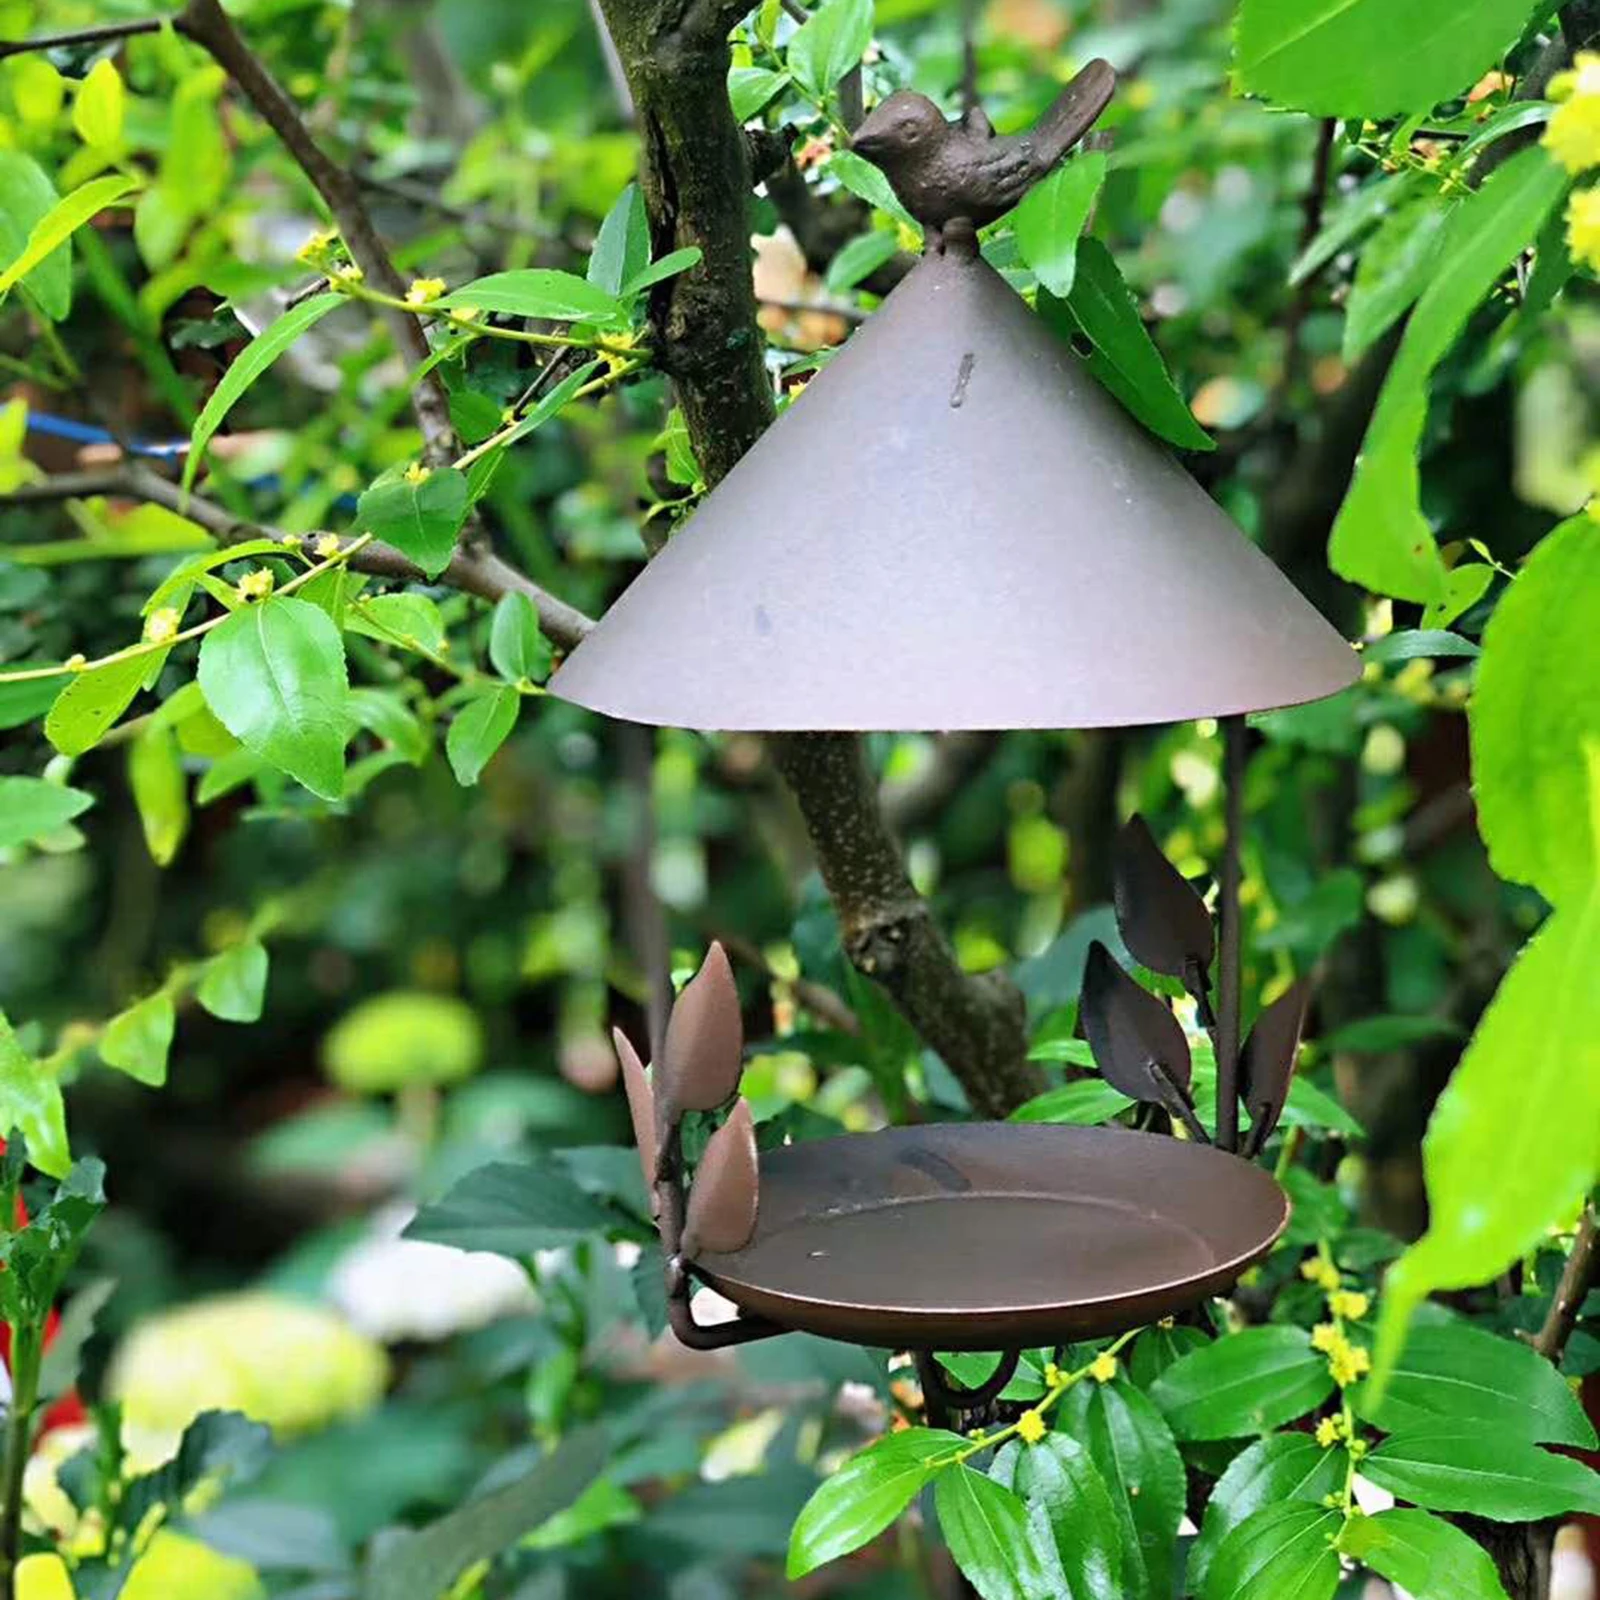 Iron Bird Feeder Rainproof Hanging Pet Bird Feeder for Various Pet Birds Feeding Supplies Outdoor Garden Decor